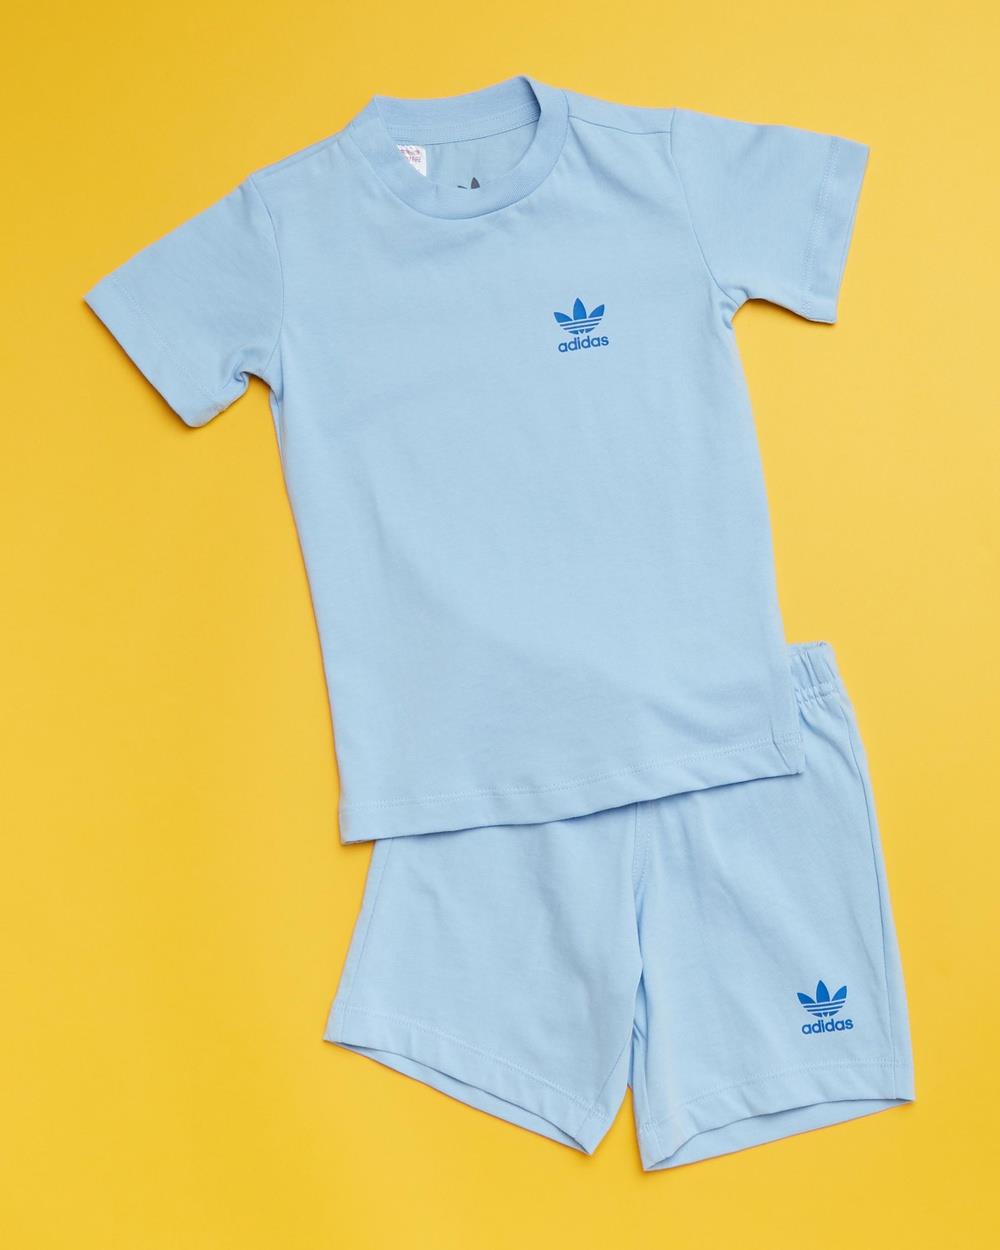 adidas Originals - Shorts and Tee Set Babies Kids - 2 Piece (Clear Sky) Shorts and Tee Set - Babies-Kids